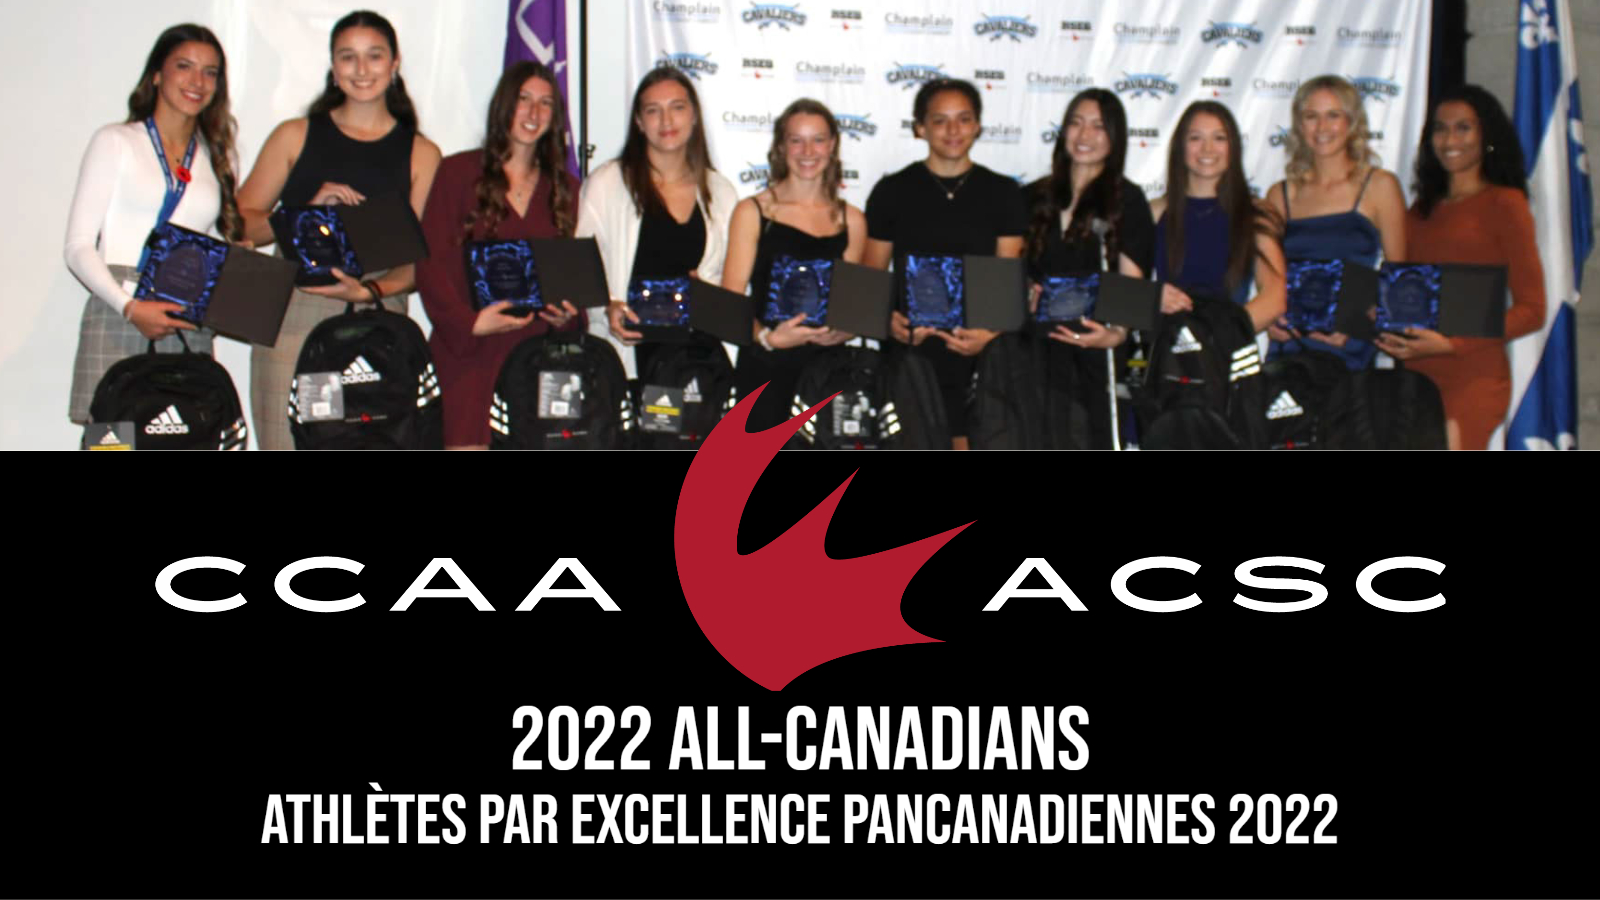 CCAA Women’s Soccer award recipients